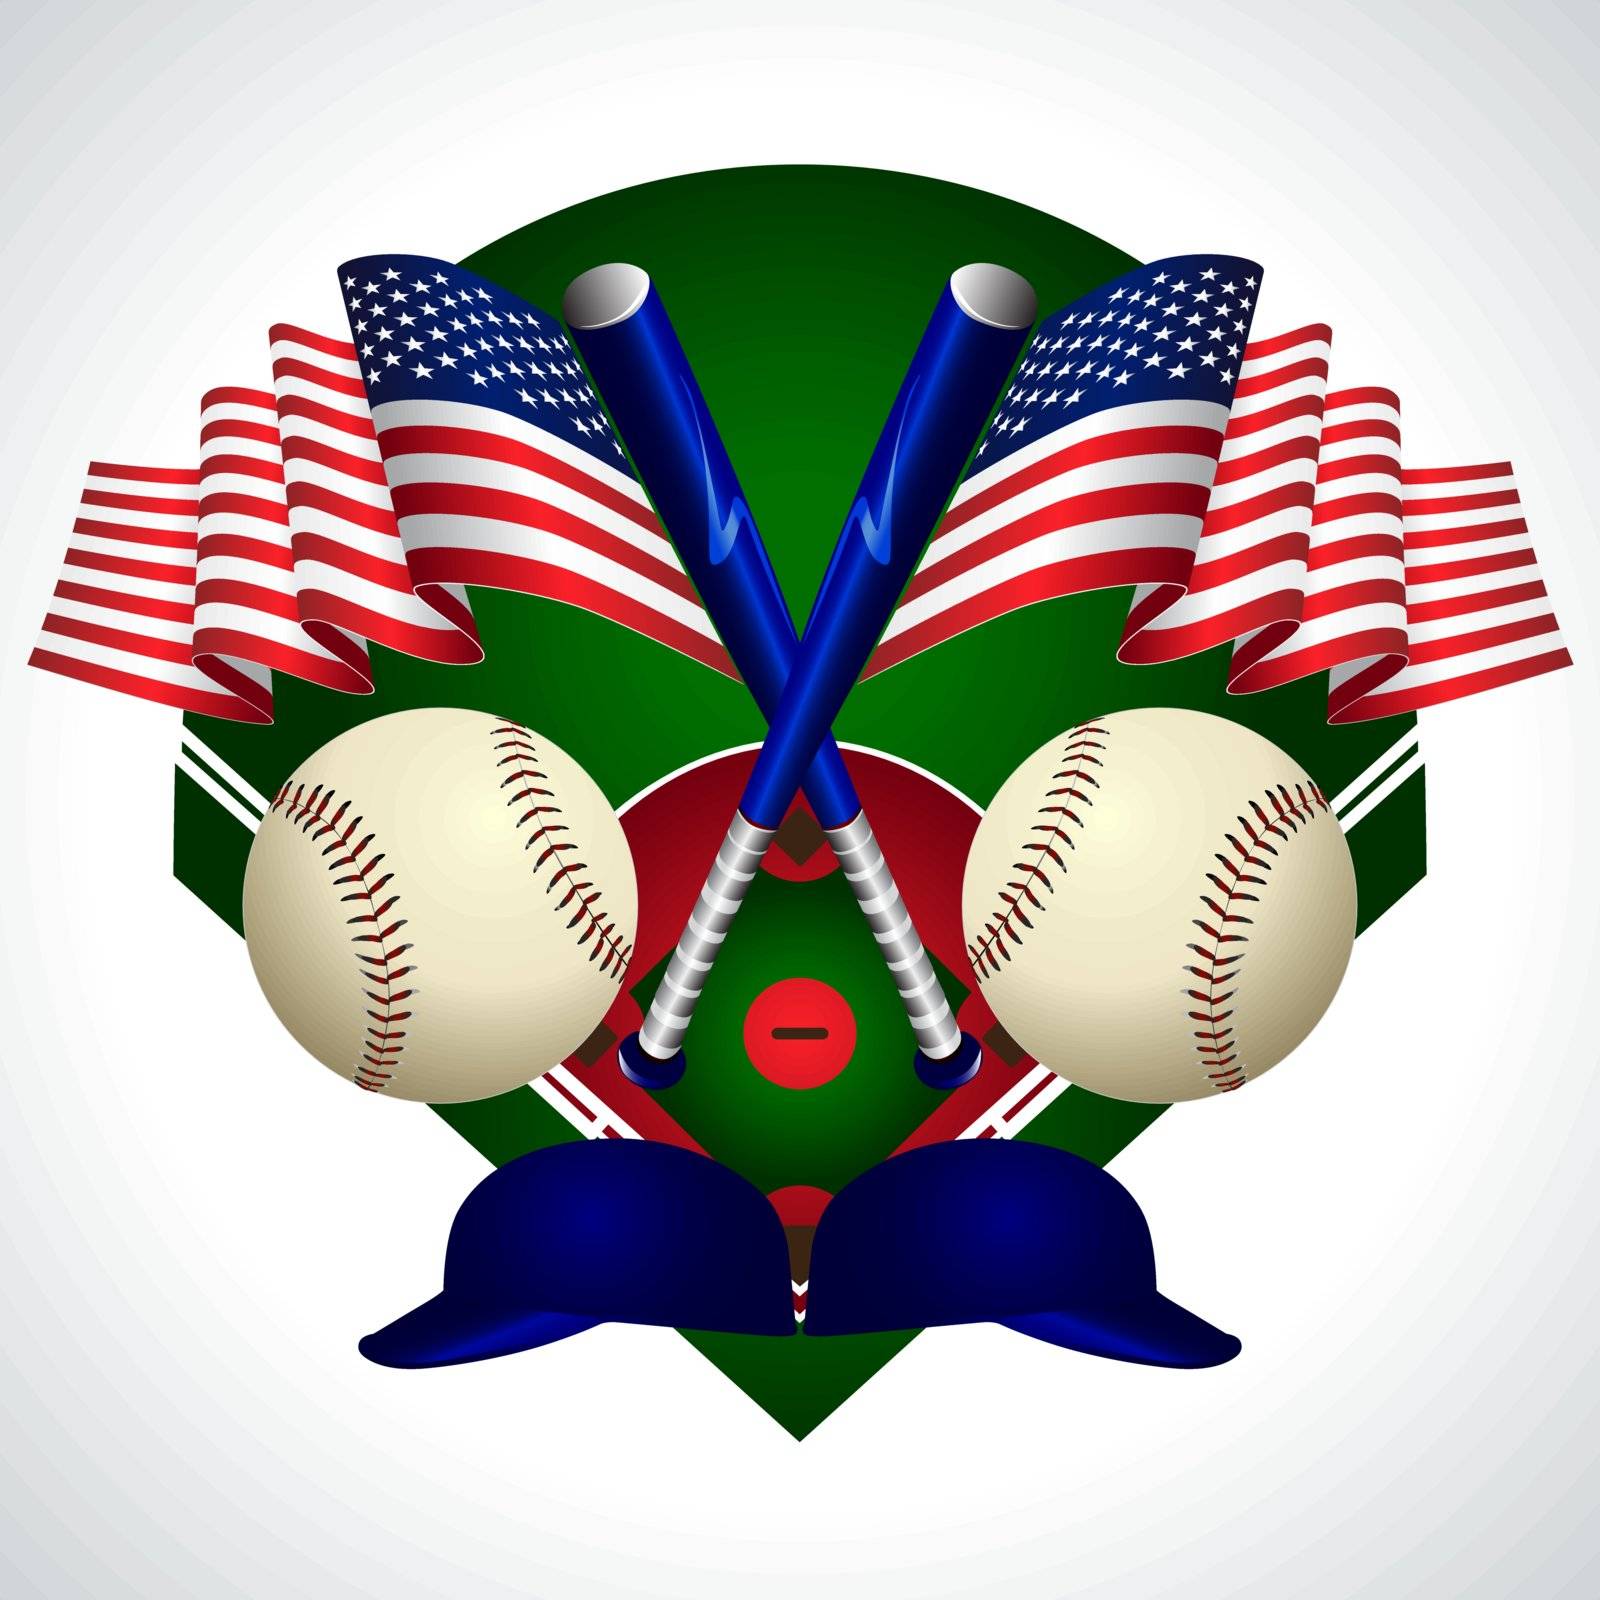 Emblem of USA flag and baseball equipment by nirots